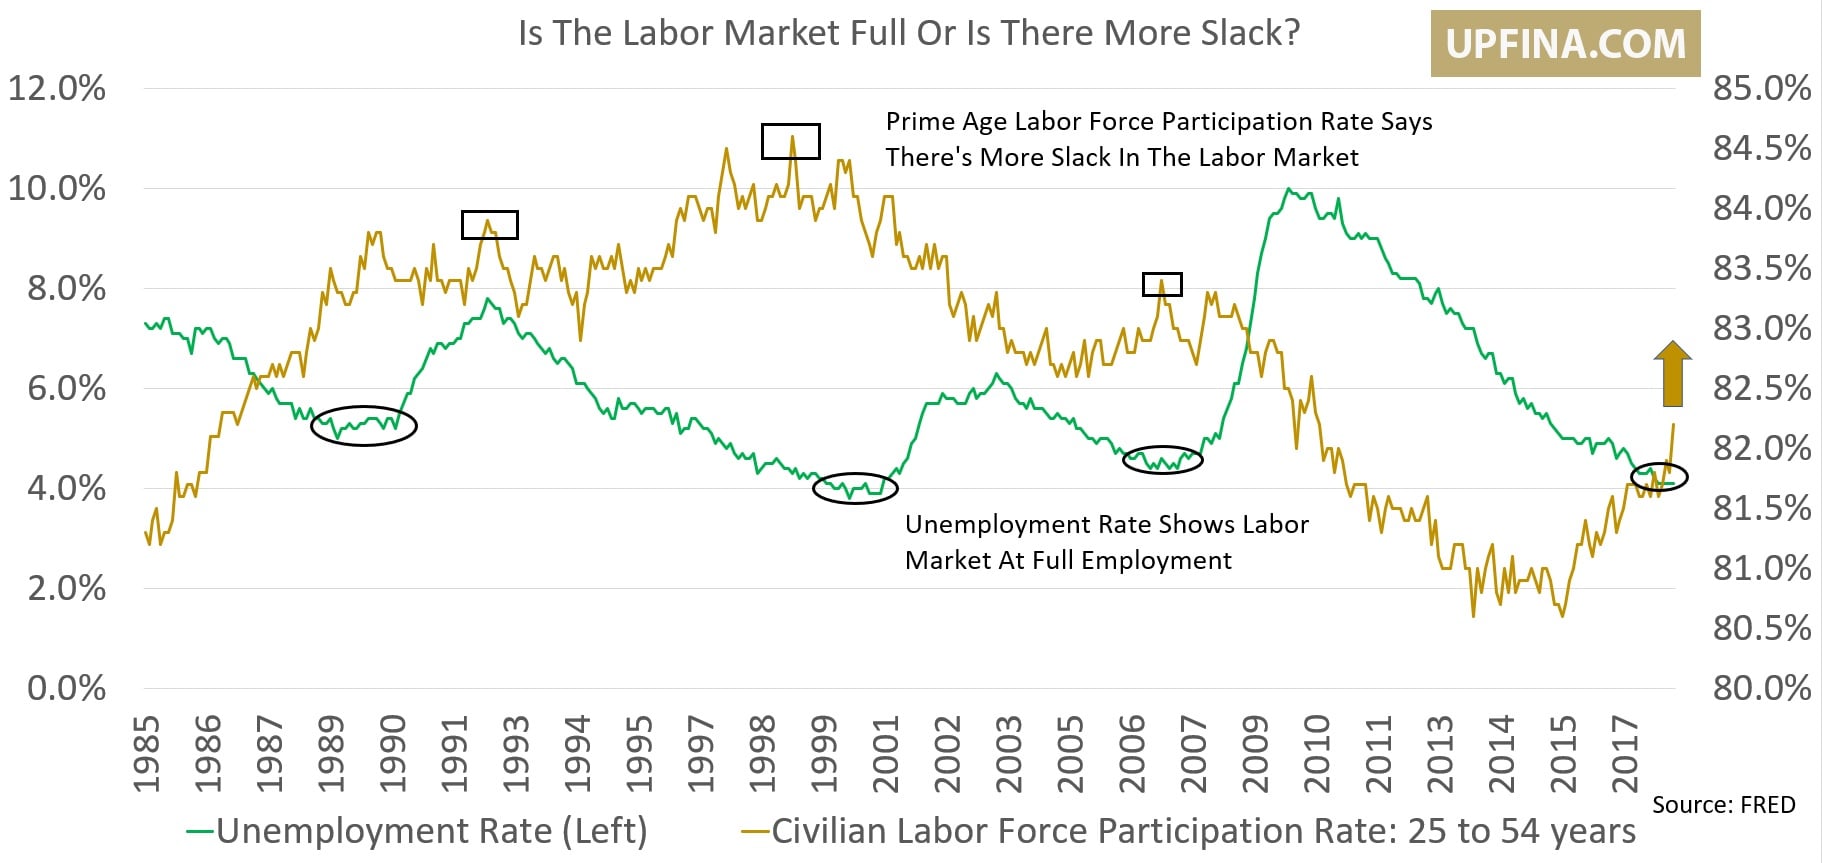 Full Labor Market